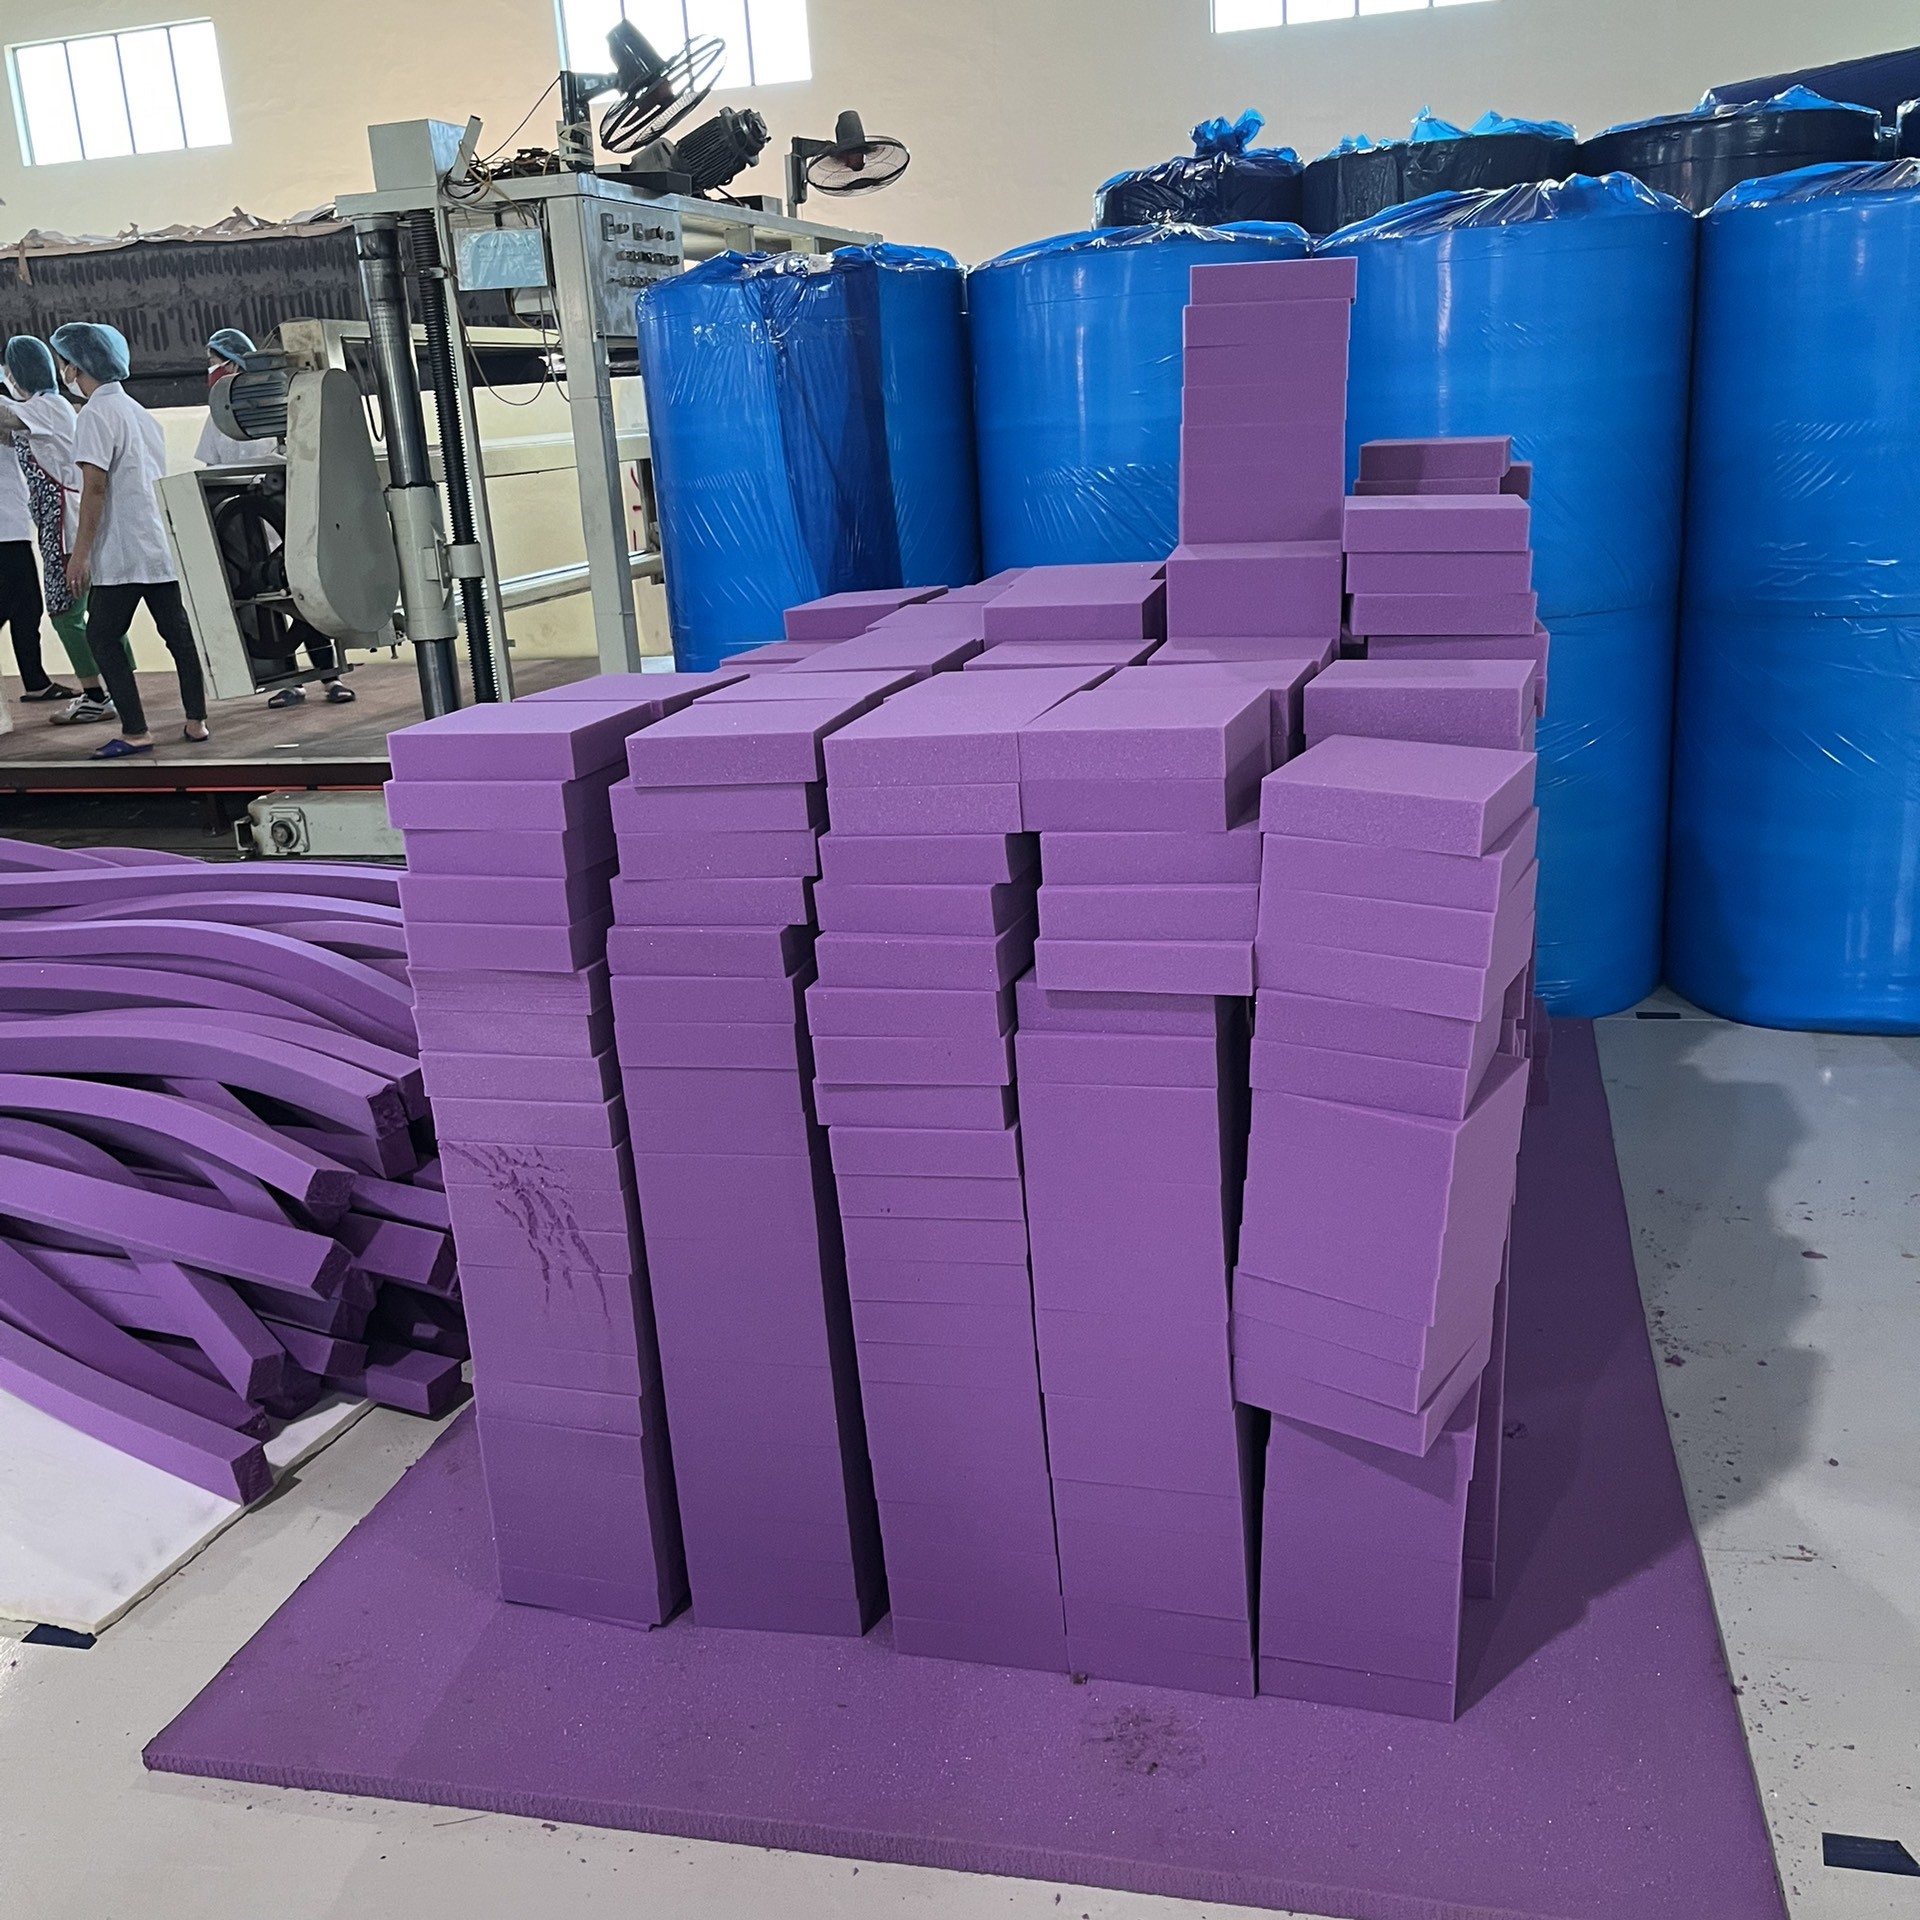 Polyurethane Foam Mattress Good Quality Design Freedom Consumer Goods Professional Shorten Production Time Made in Vietnam 3